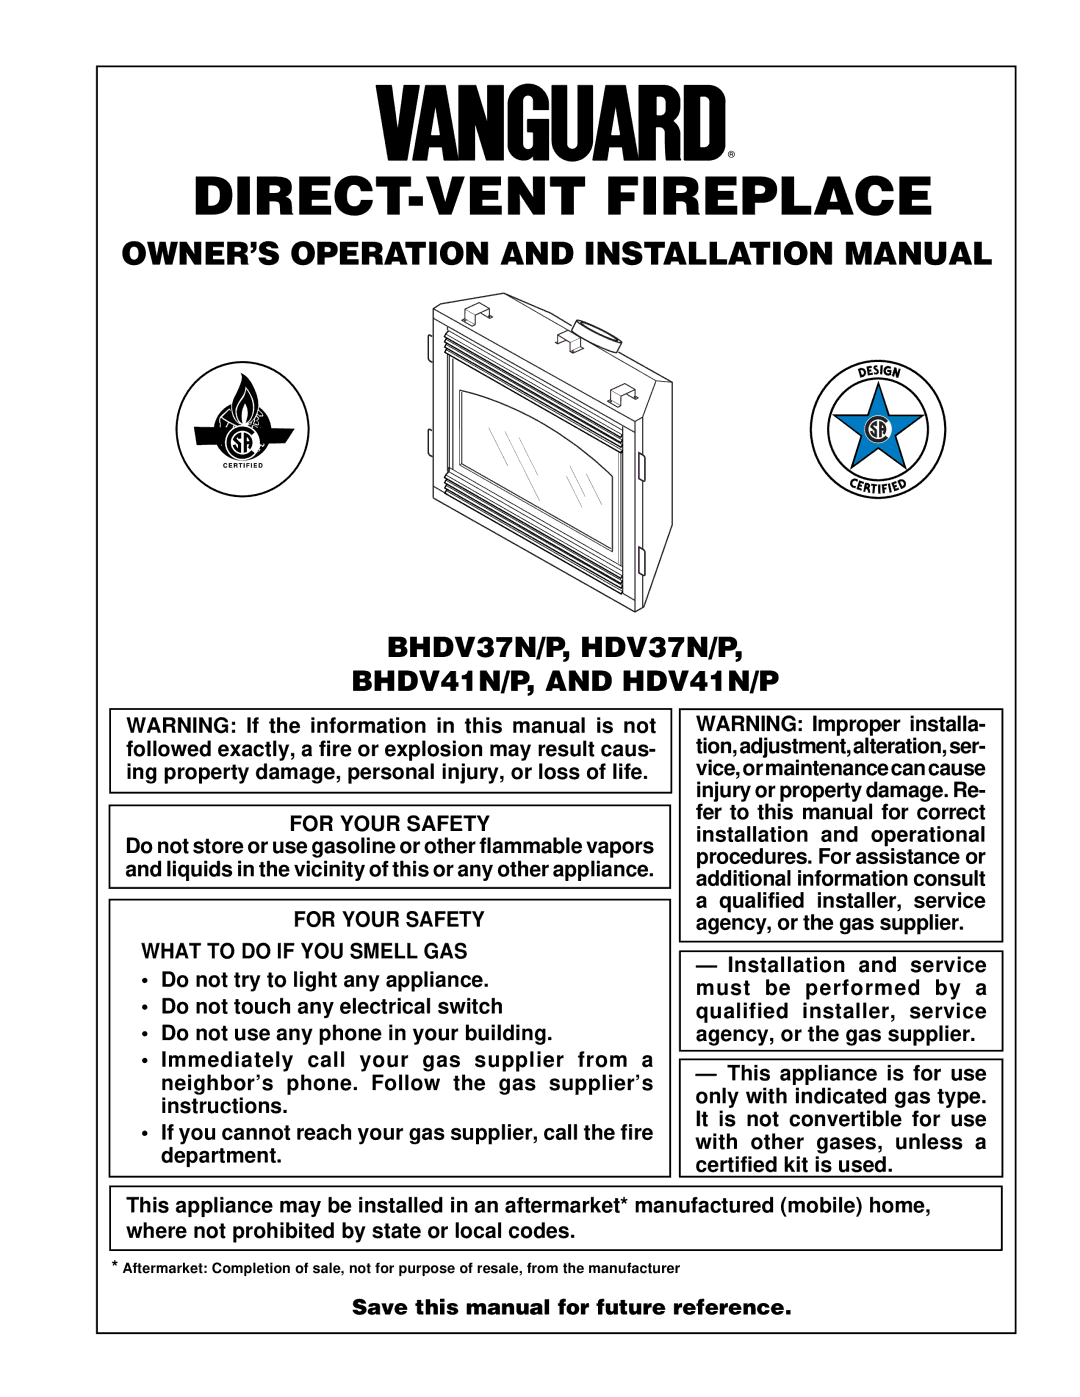 Desa installation manual BHDV37N/P, HDV37N/P BHDV41N/P, and HDV41N/P, For Your Safety 